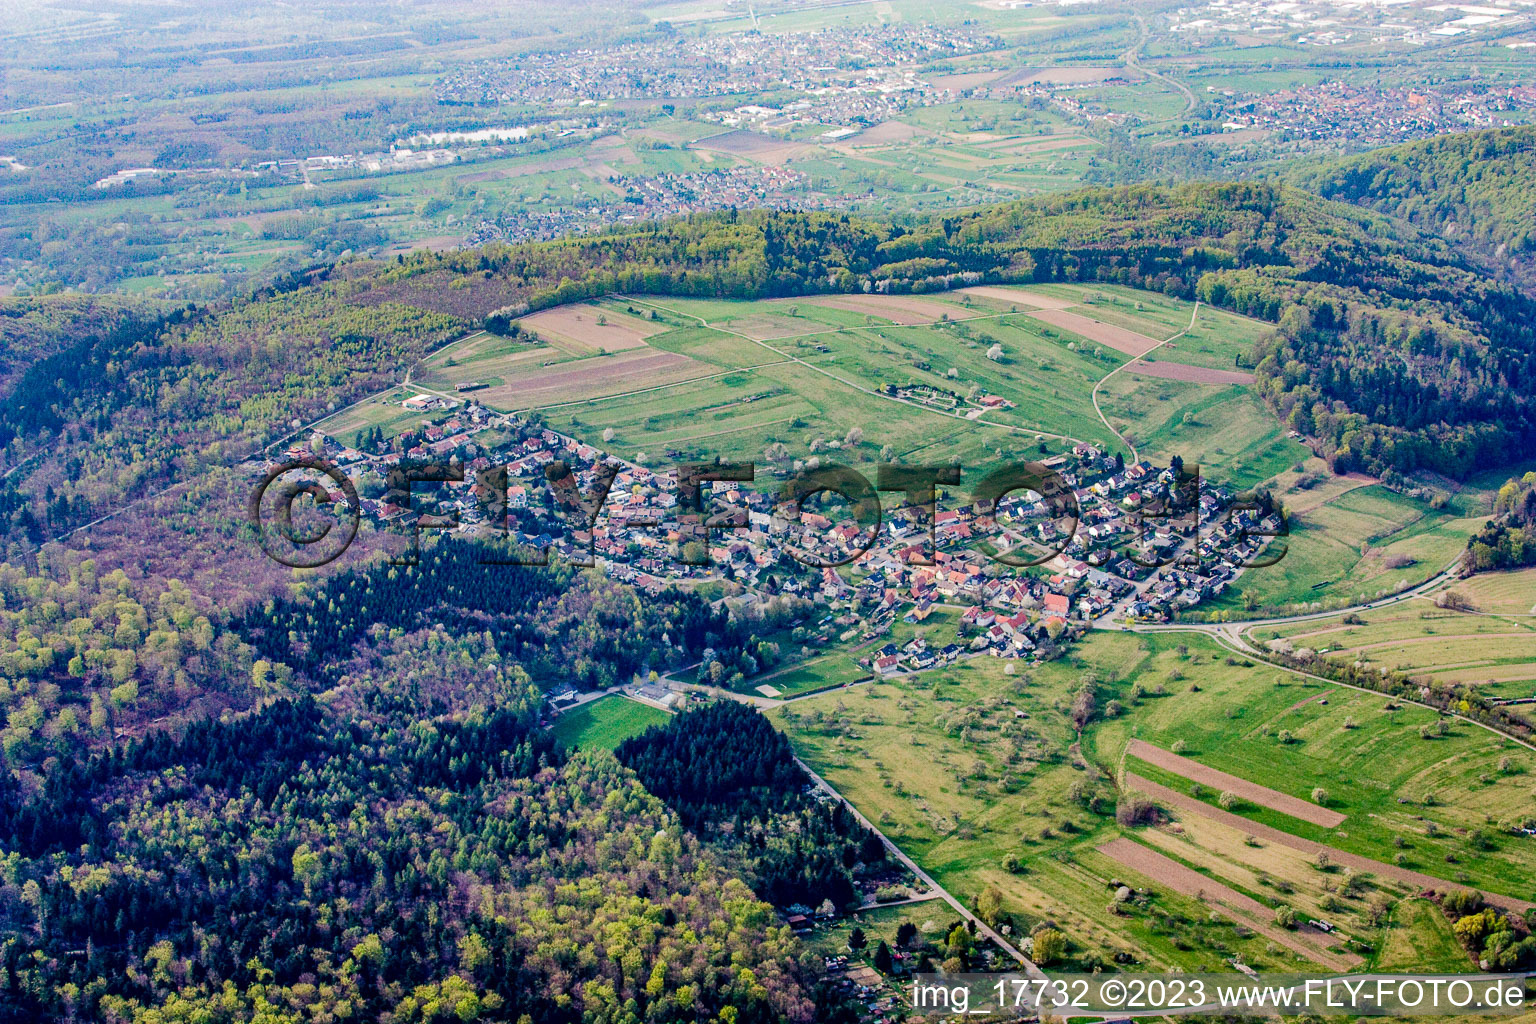 Drone image of District Schluttenbach in Ettlingen in the state Baden-Wuerttemberg, Germany